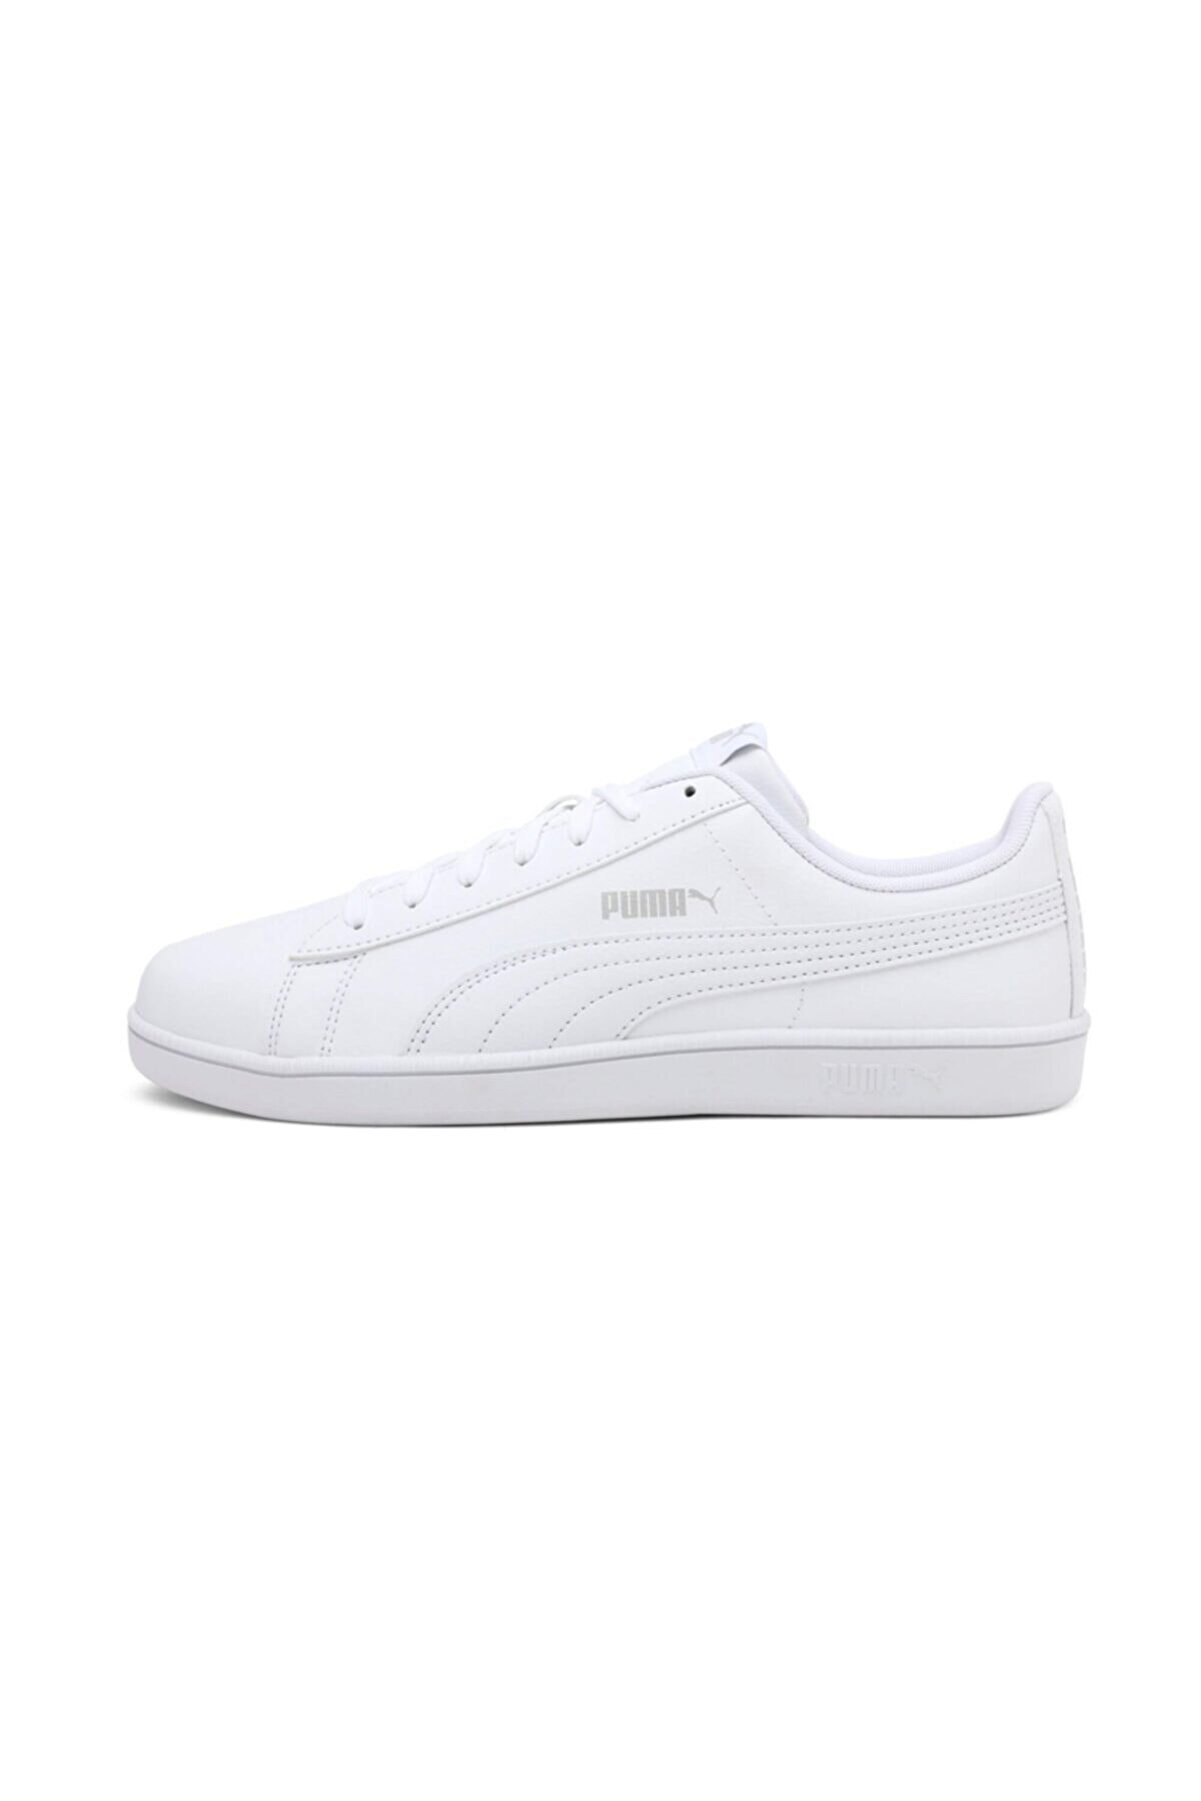 Puma UP TDP Beyaz Erkek Sneaker Ayakkabı 101085374